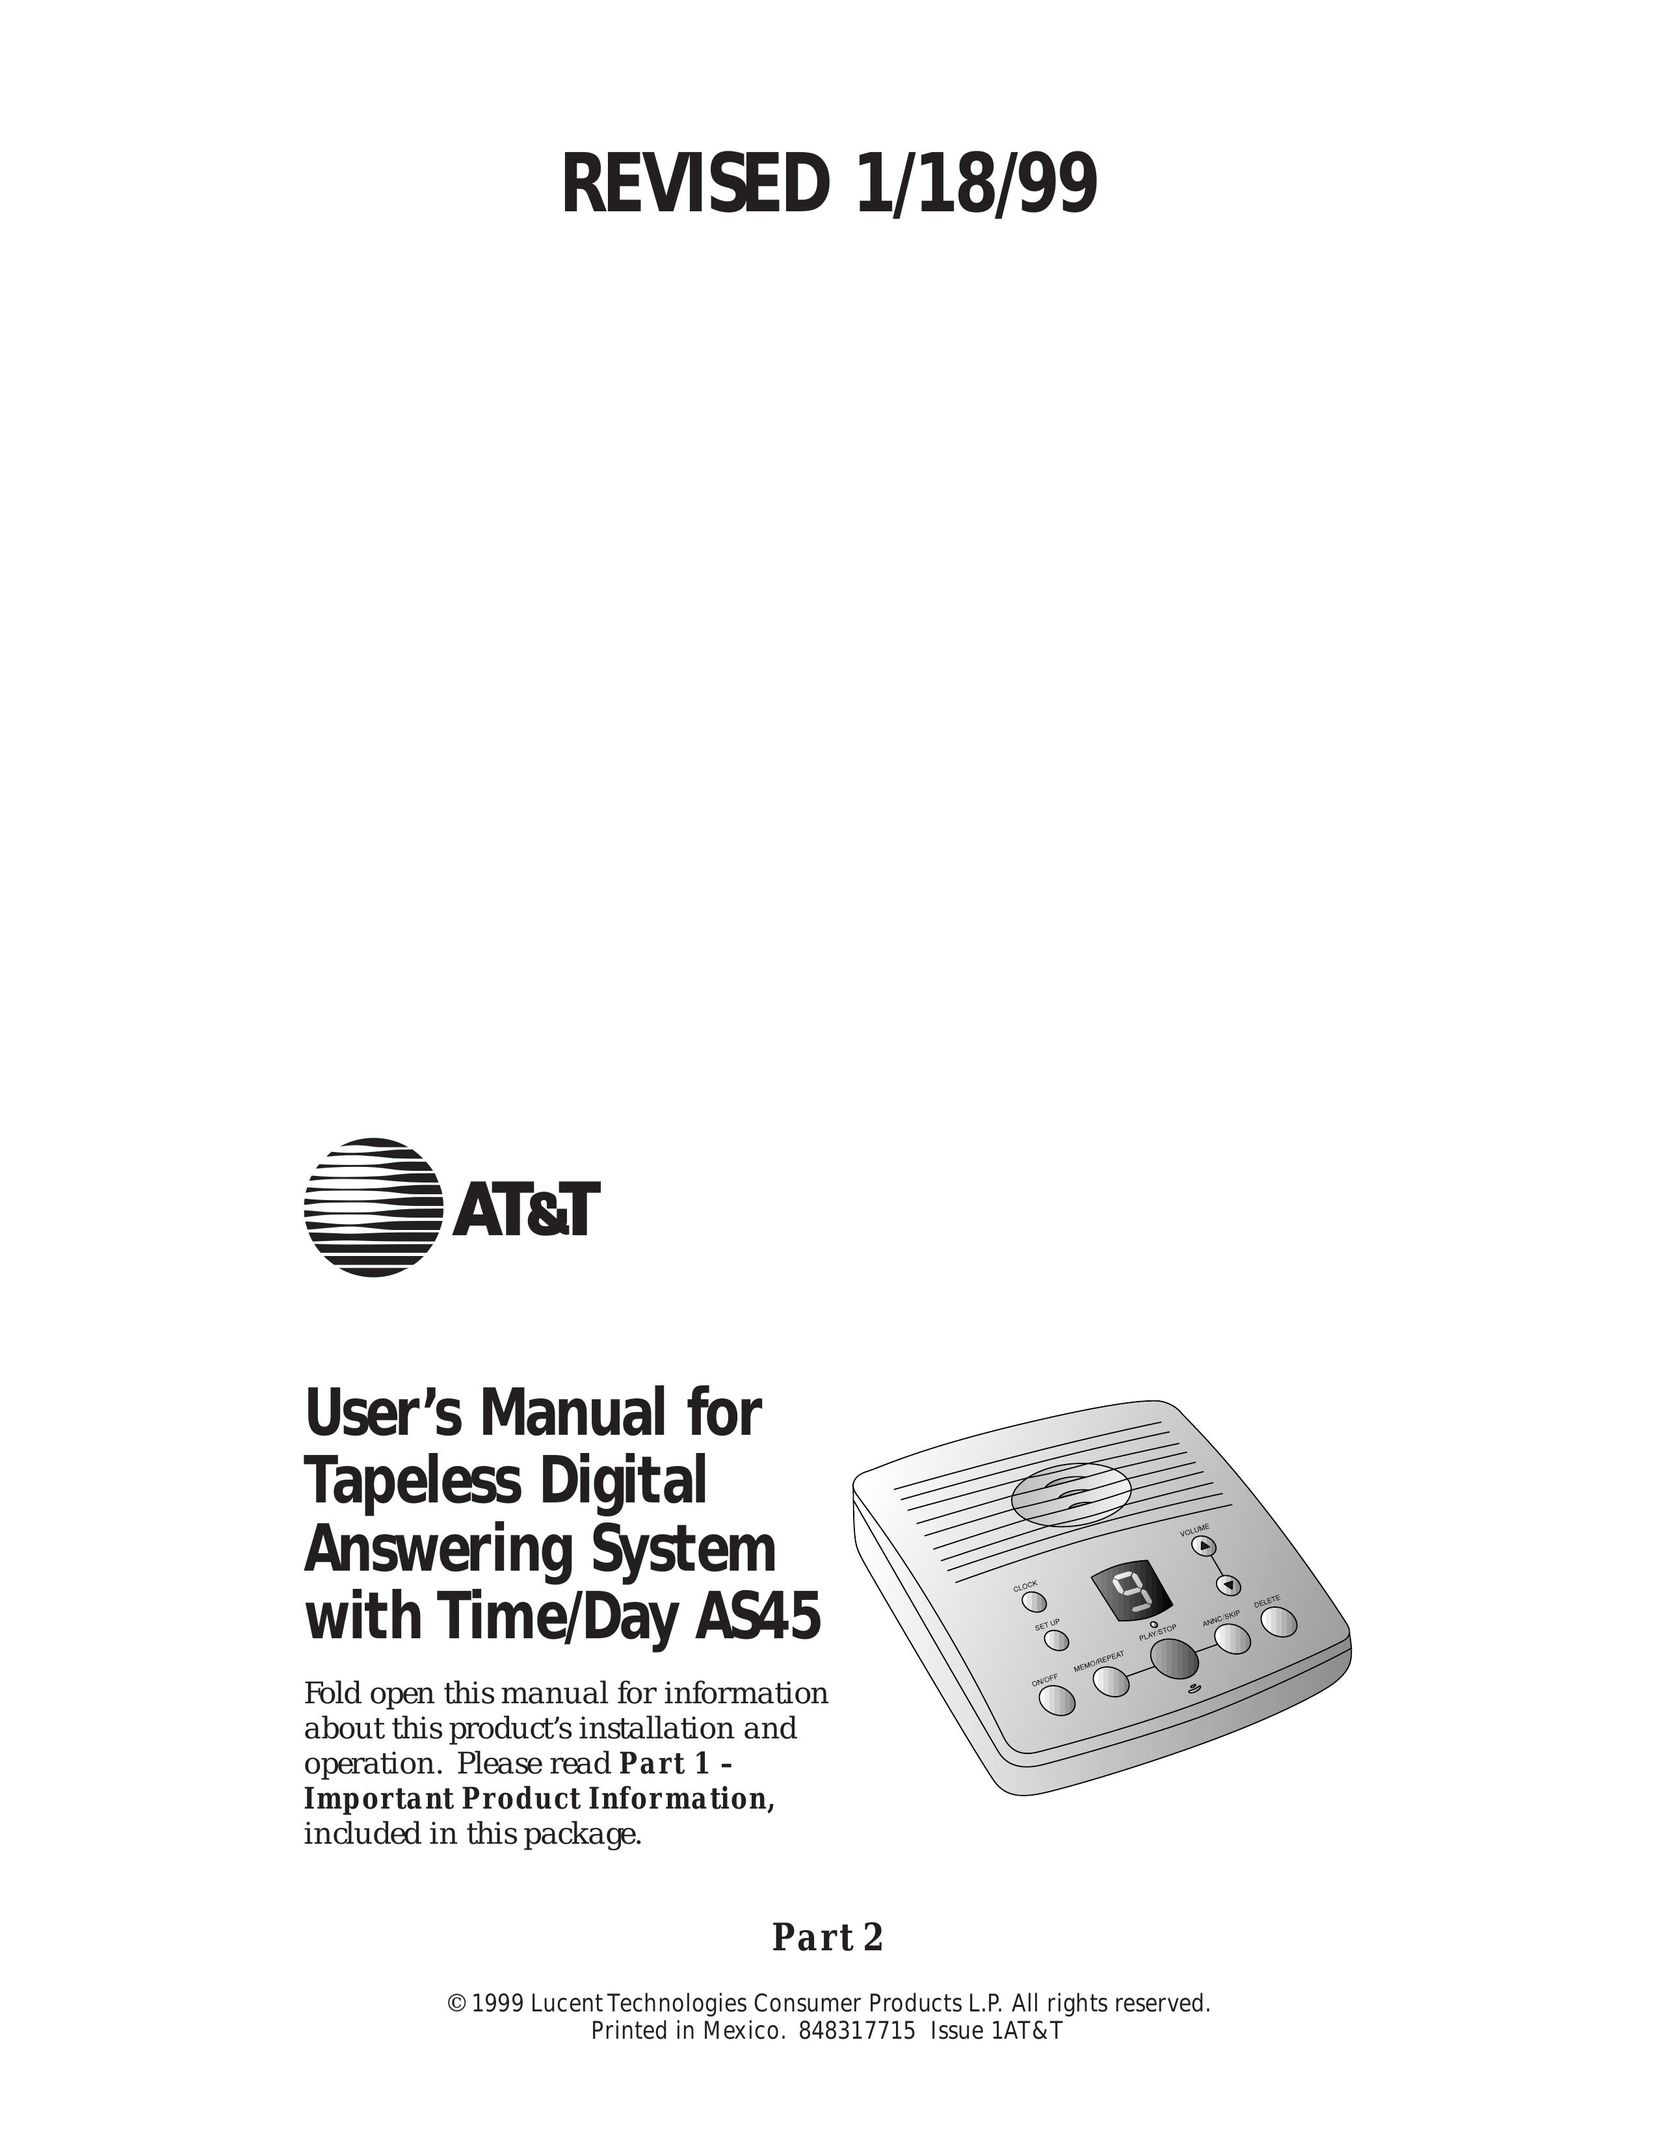 AT&T AS45 Answering Machine User Manual